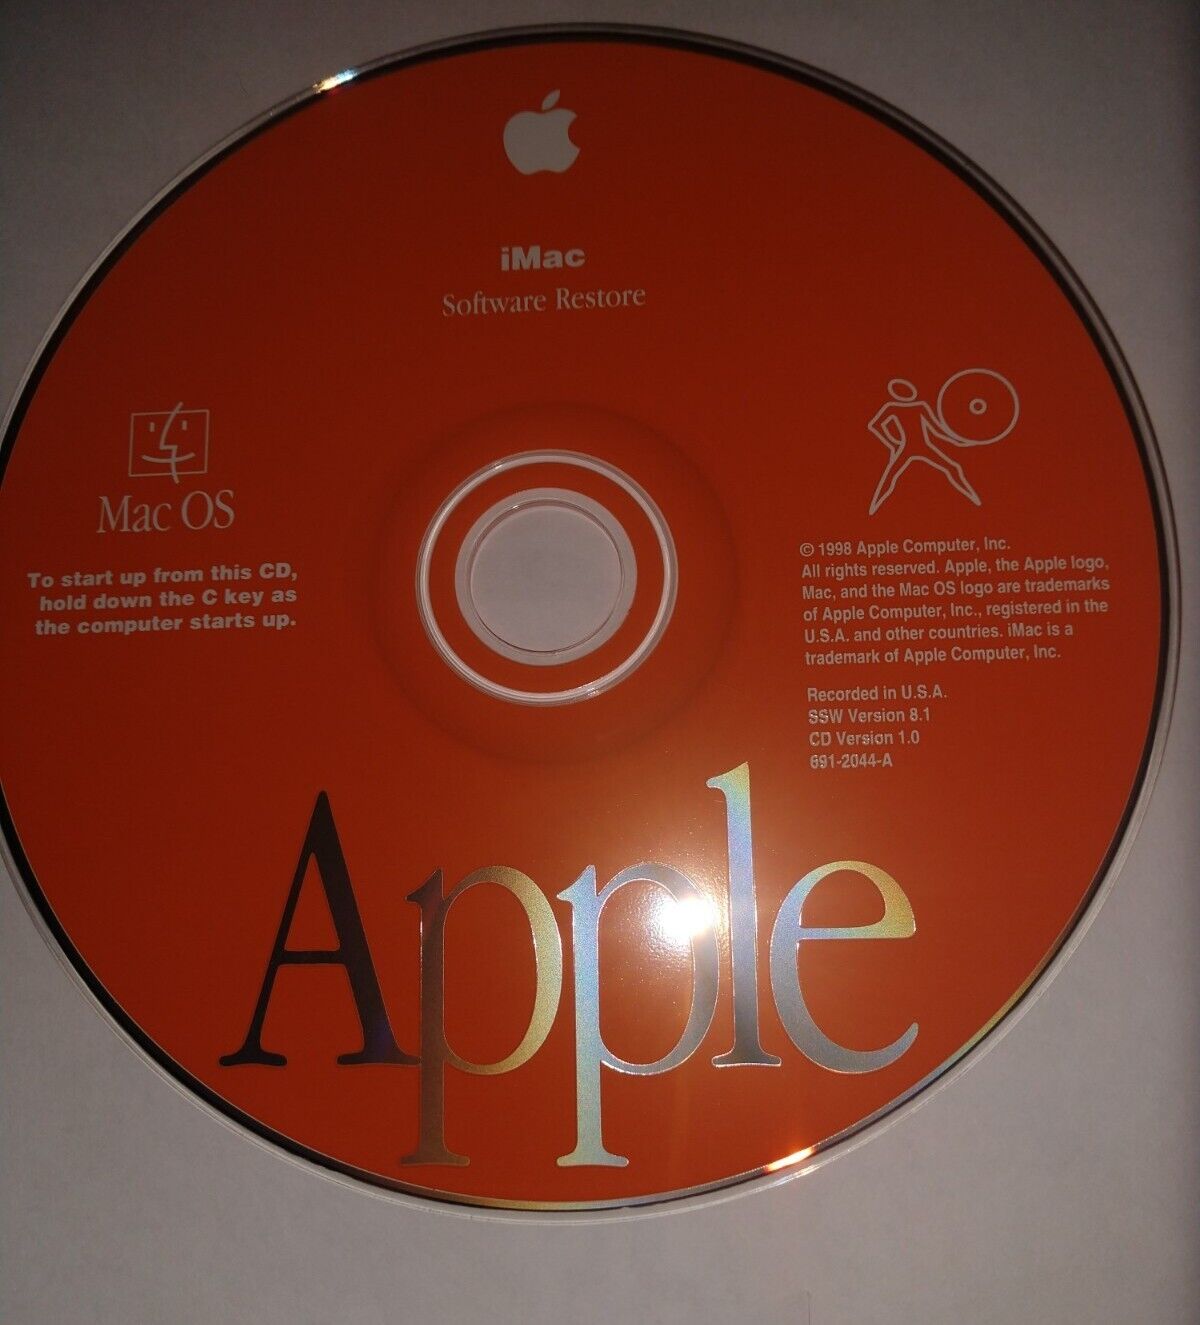 1998 iMac Software Restore CD 691-2044-A SSW 8.1 Good Condition Vintage CDVer 1